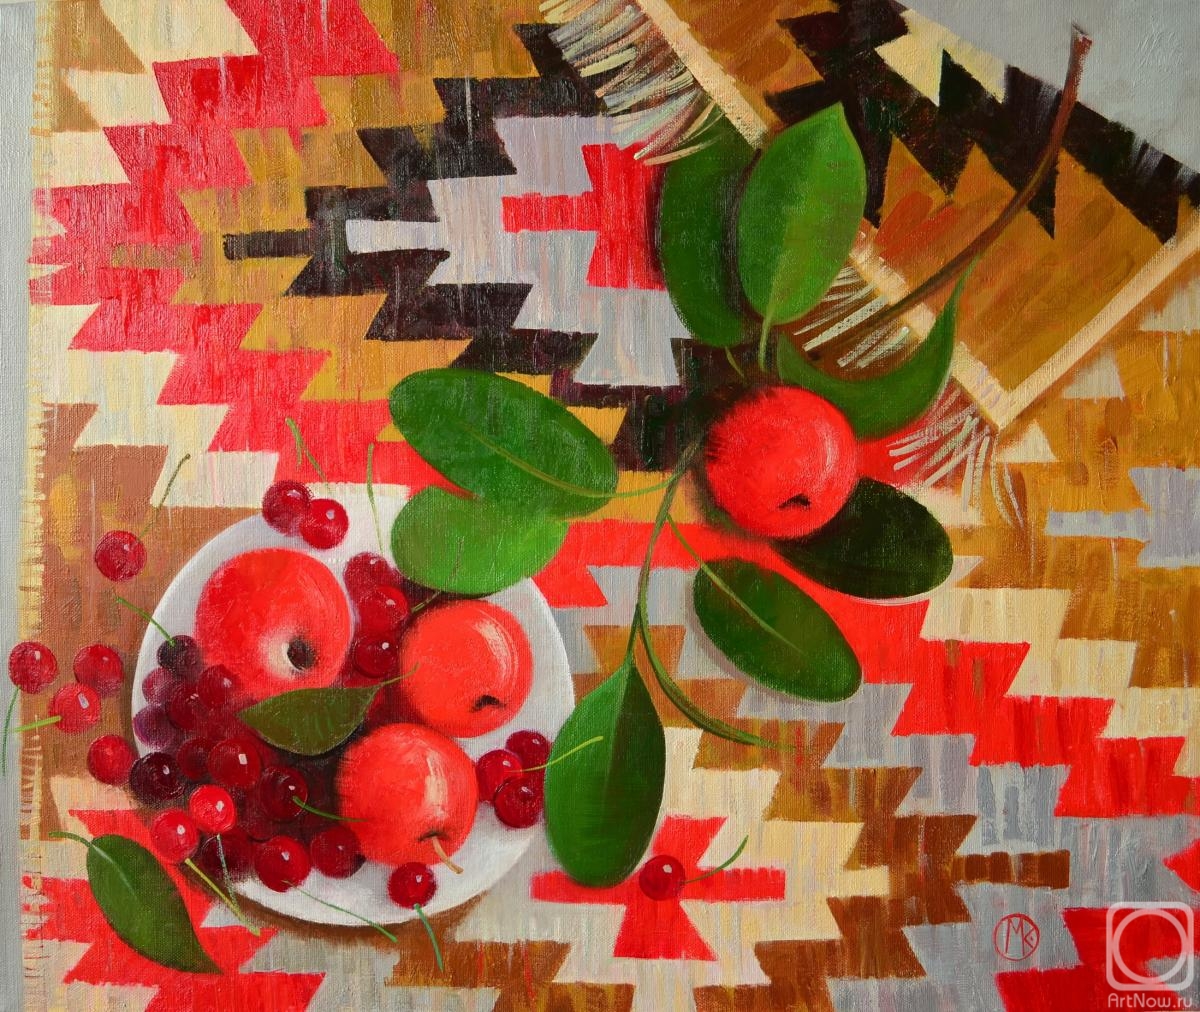 Kniazeva Maria. Apples and cherry